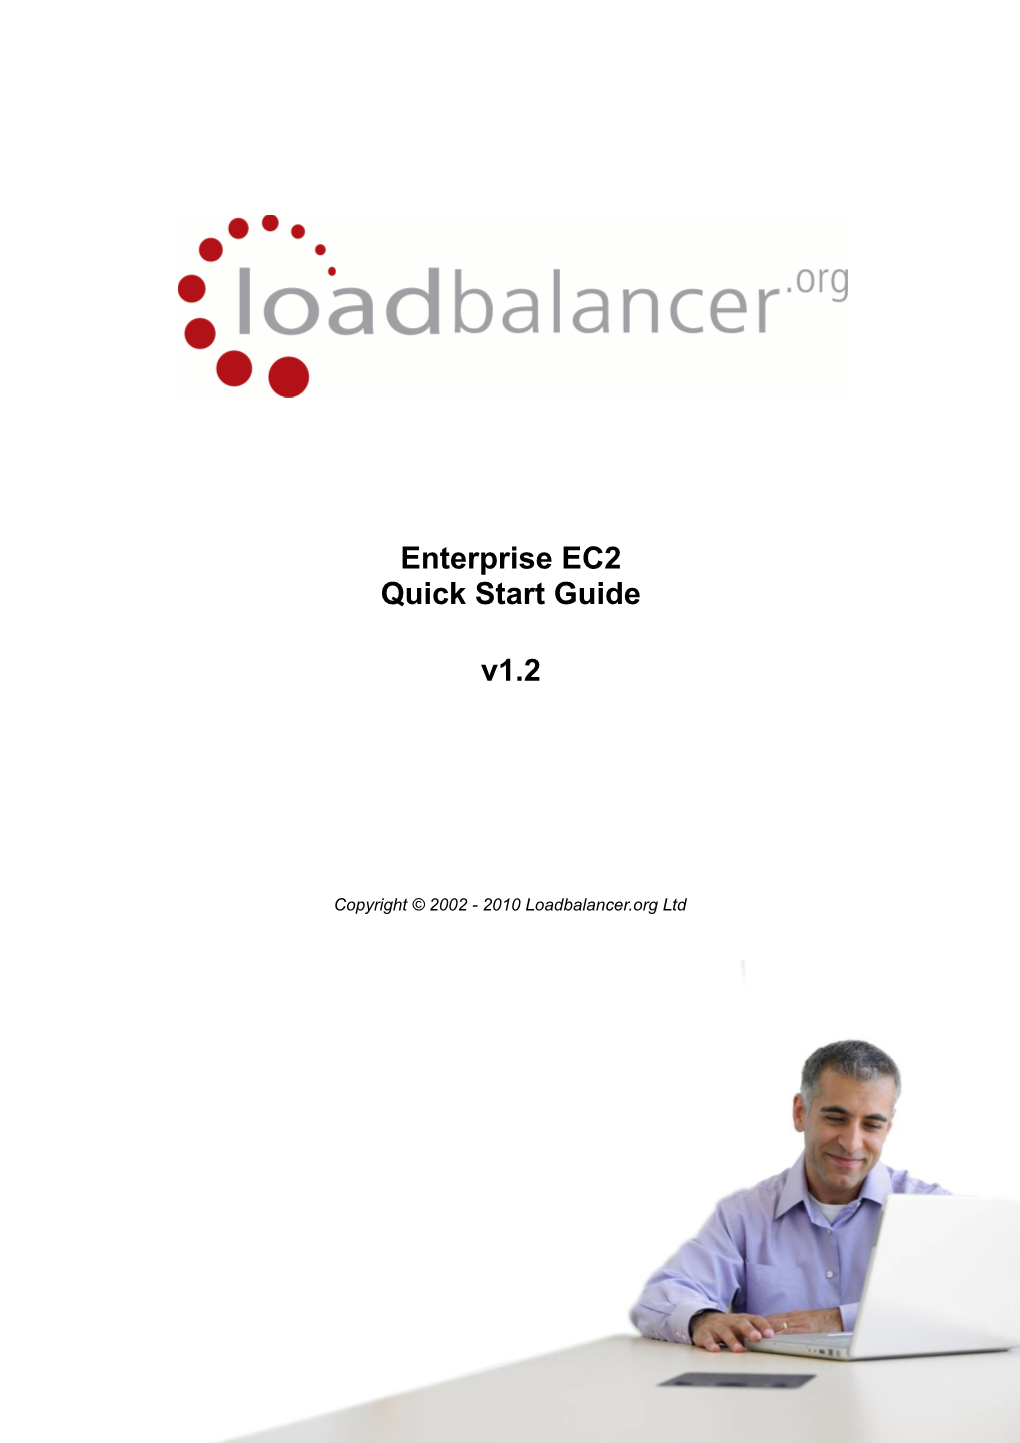 Enterprise EC2 Quick Start Guide V1.2